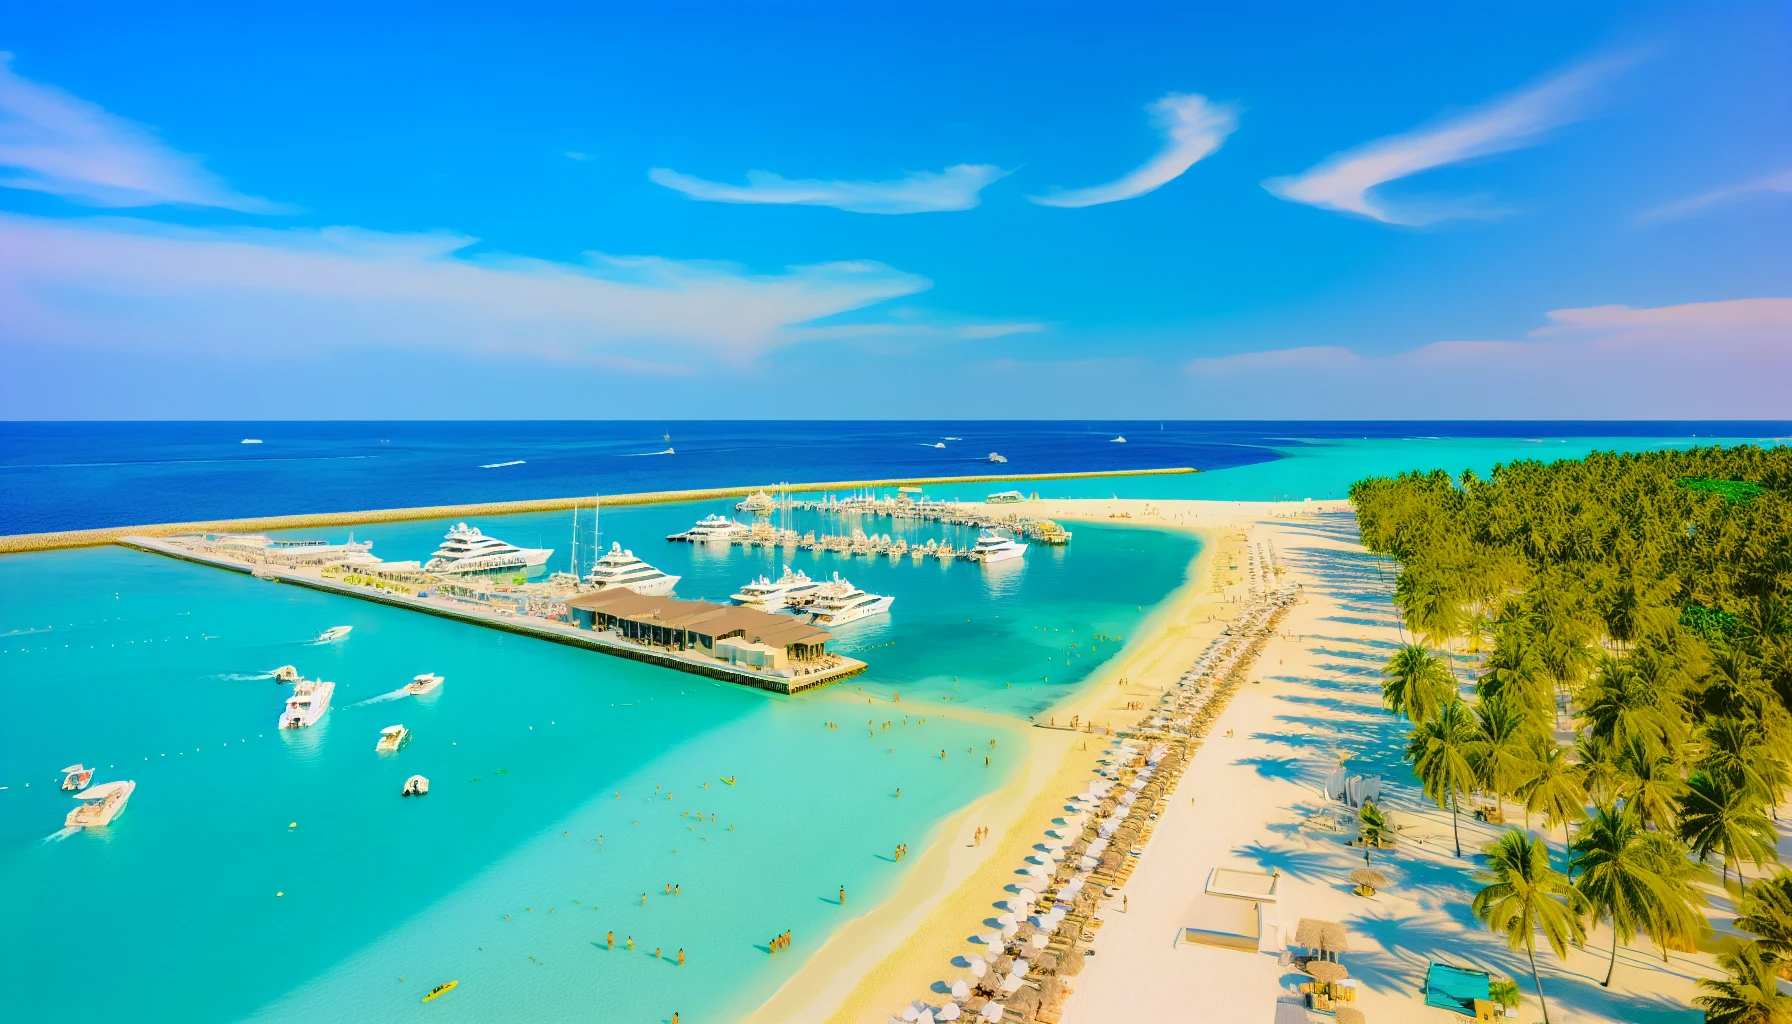 Luxurious white sand beach with a marina